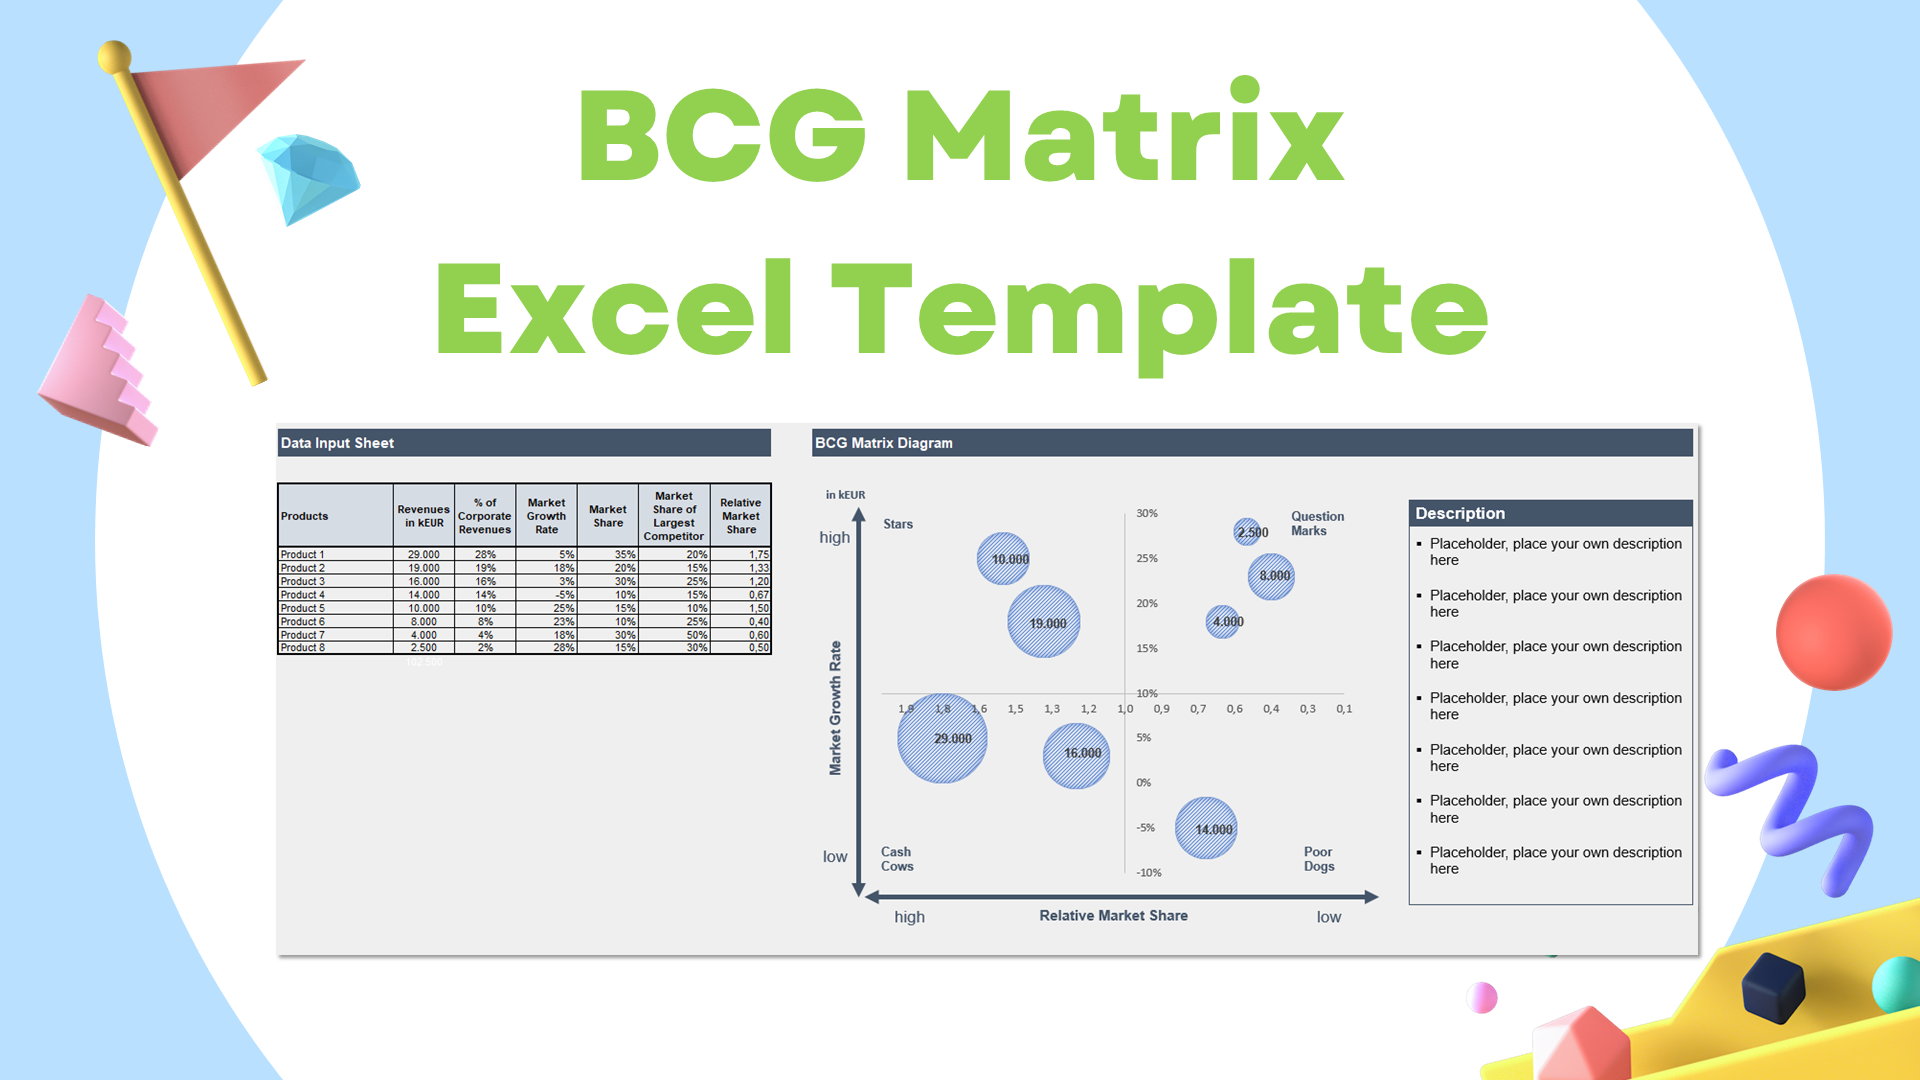 BCG Matrix: Excel Template